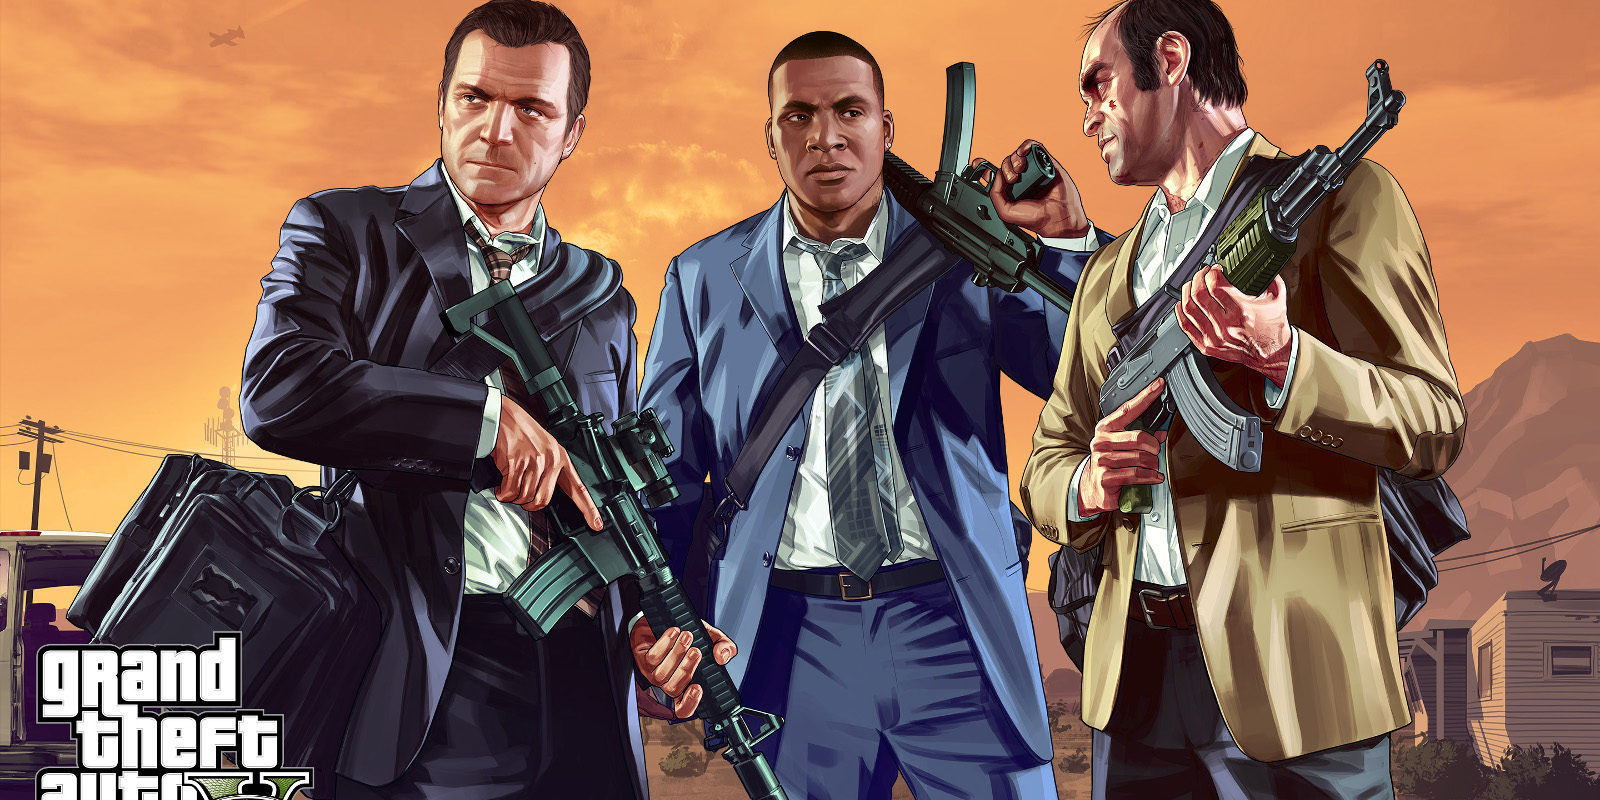 Sorteamos 3 packs de productos oficiales de 'Grand Theft Auto V'